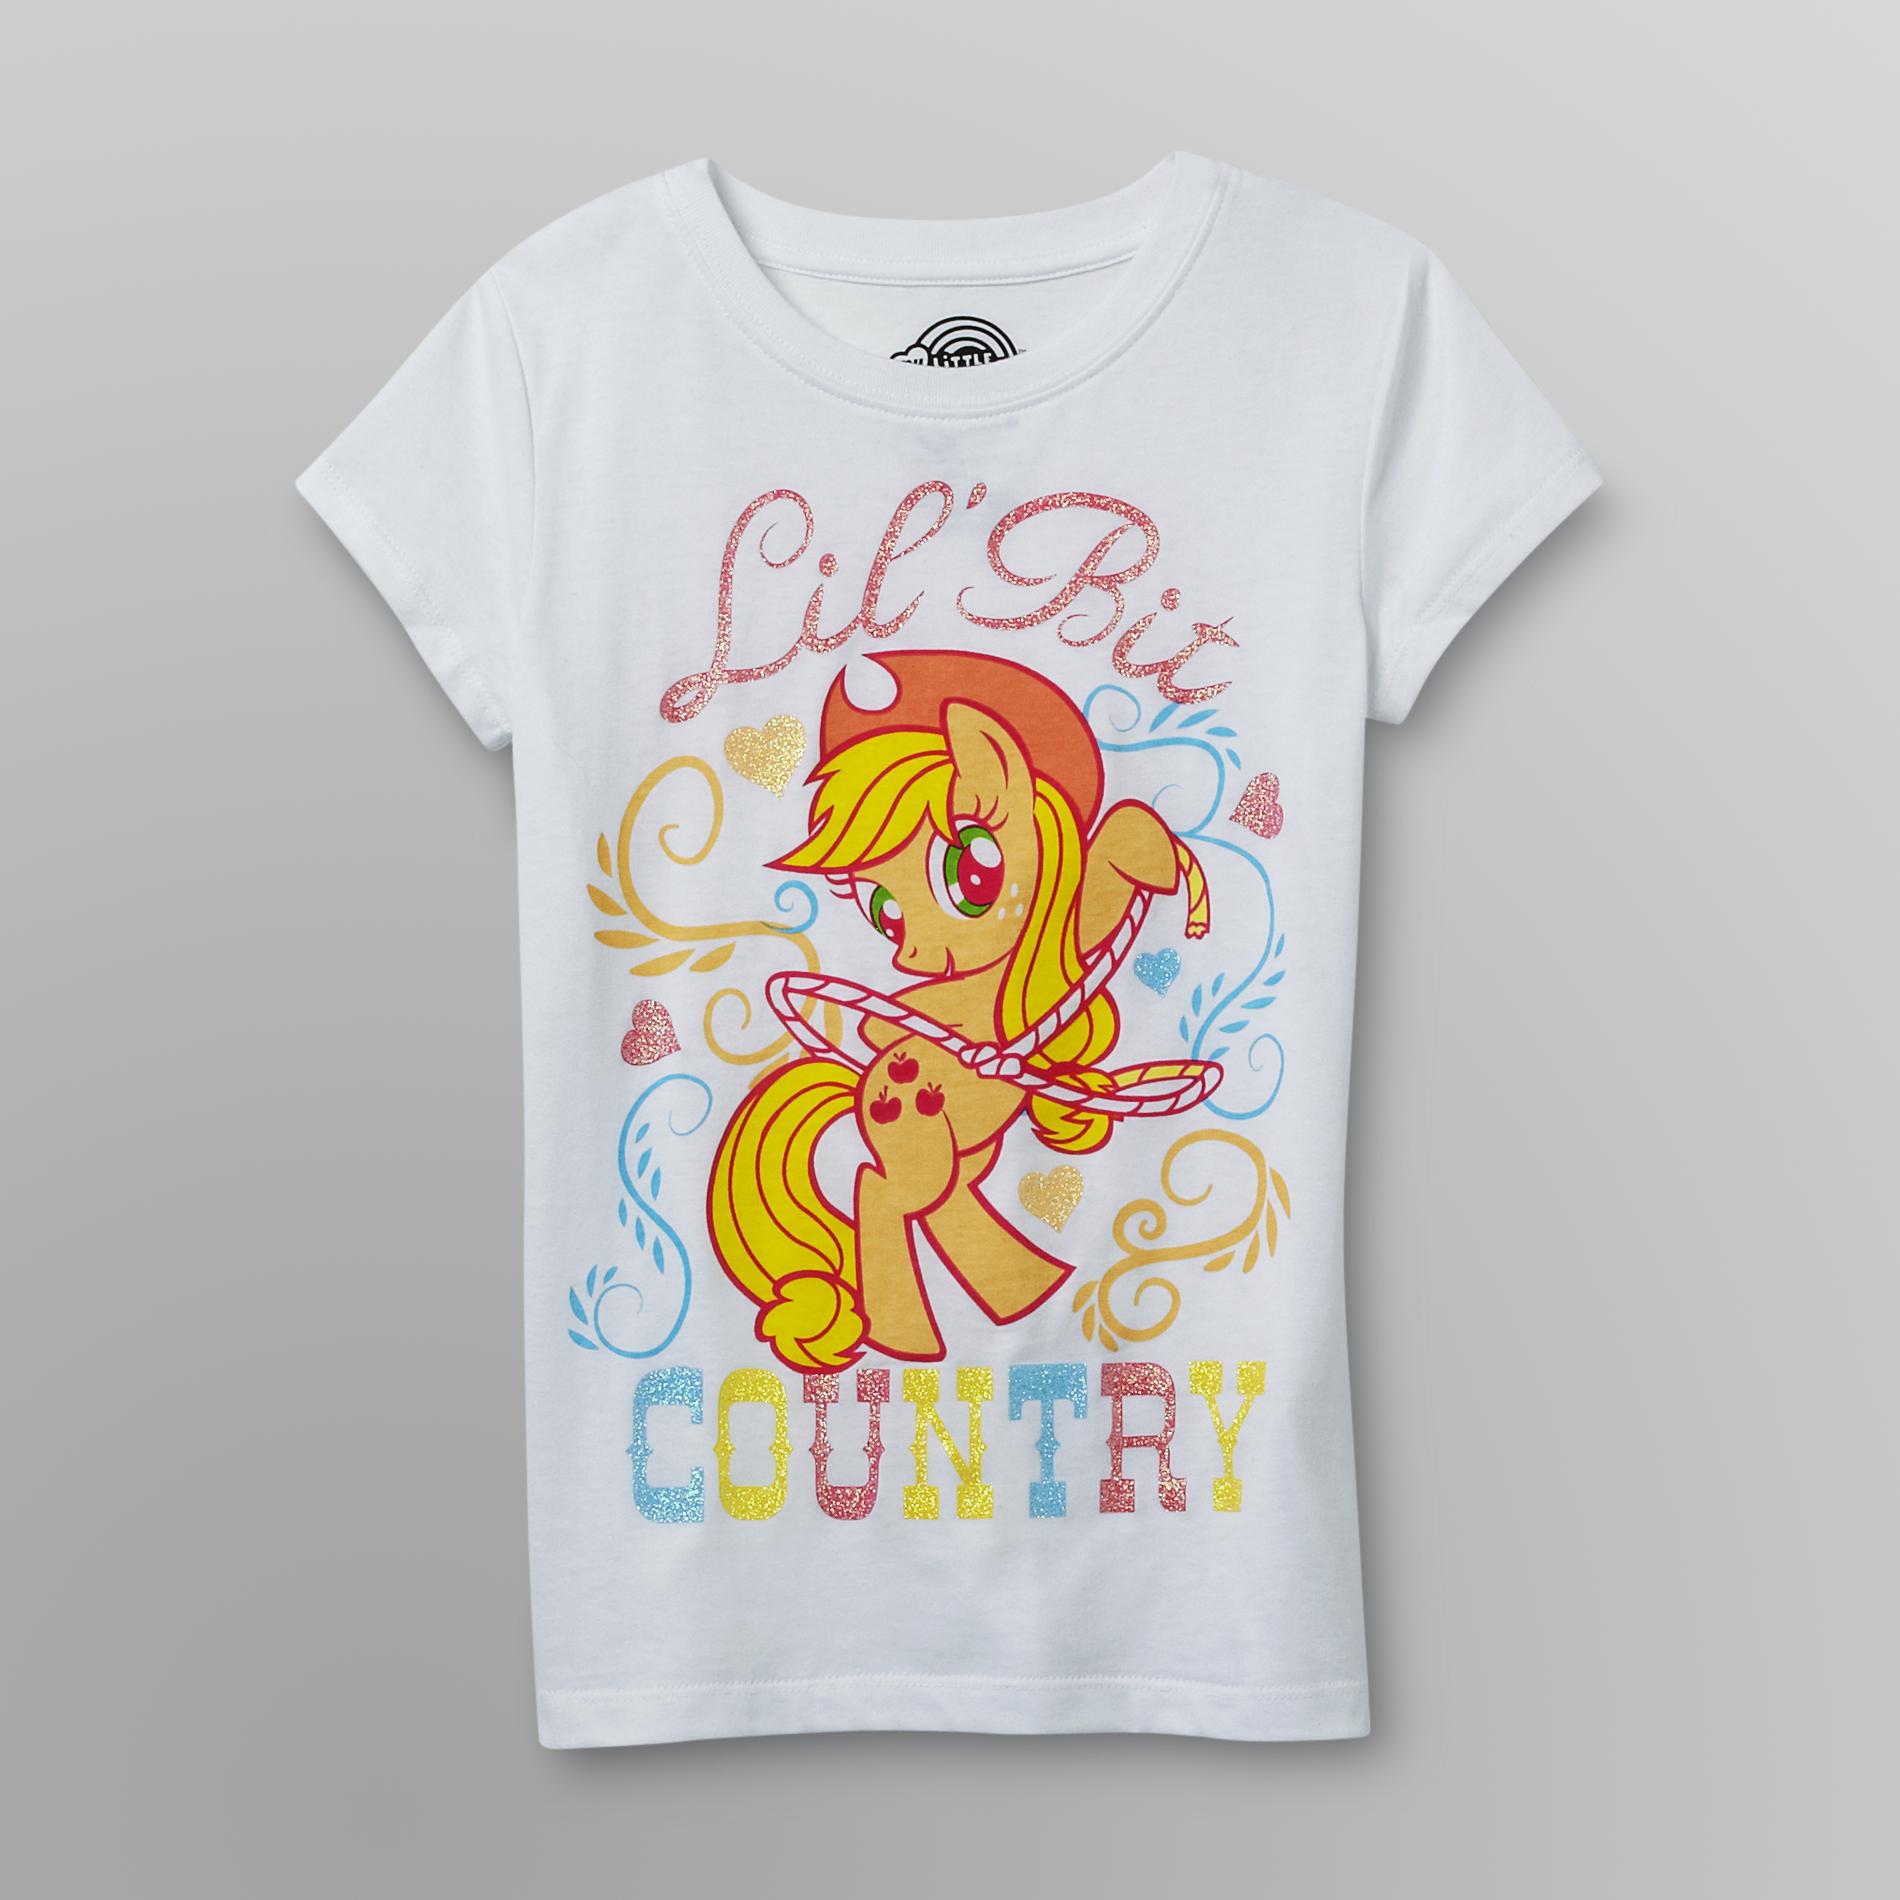 My Little Pony Girl's  T-Shirt - Applejack